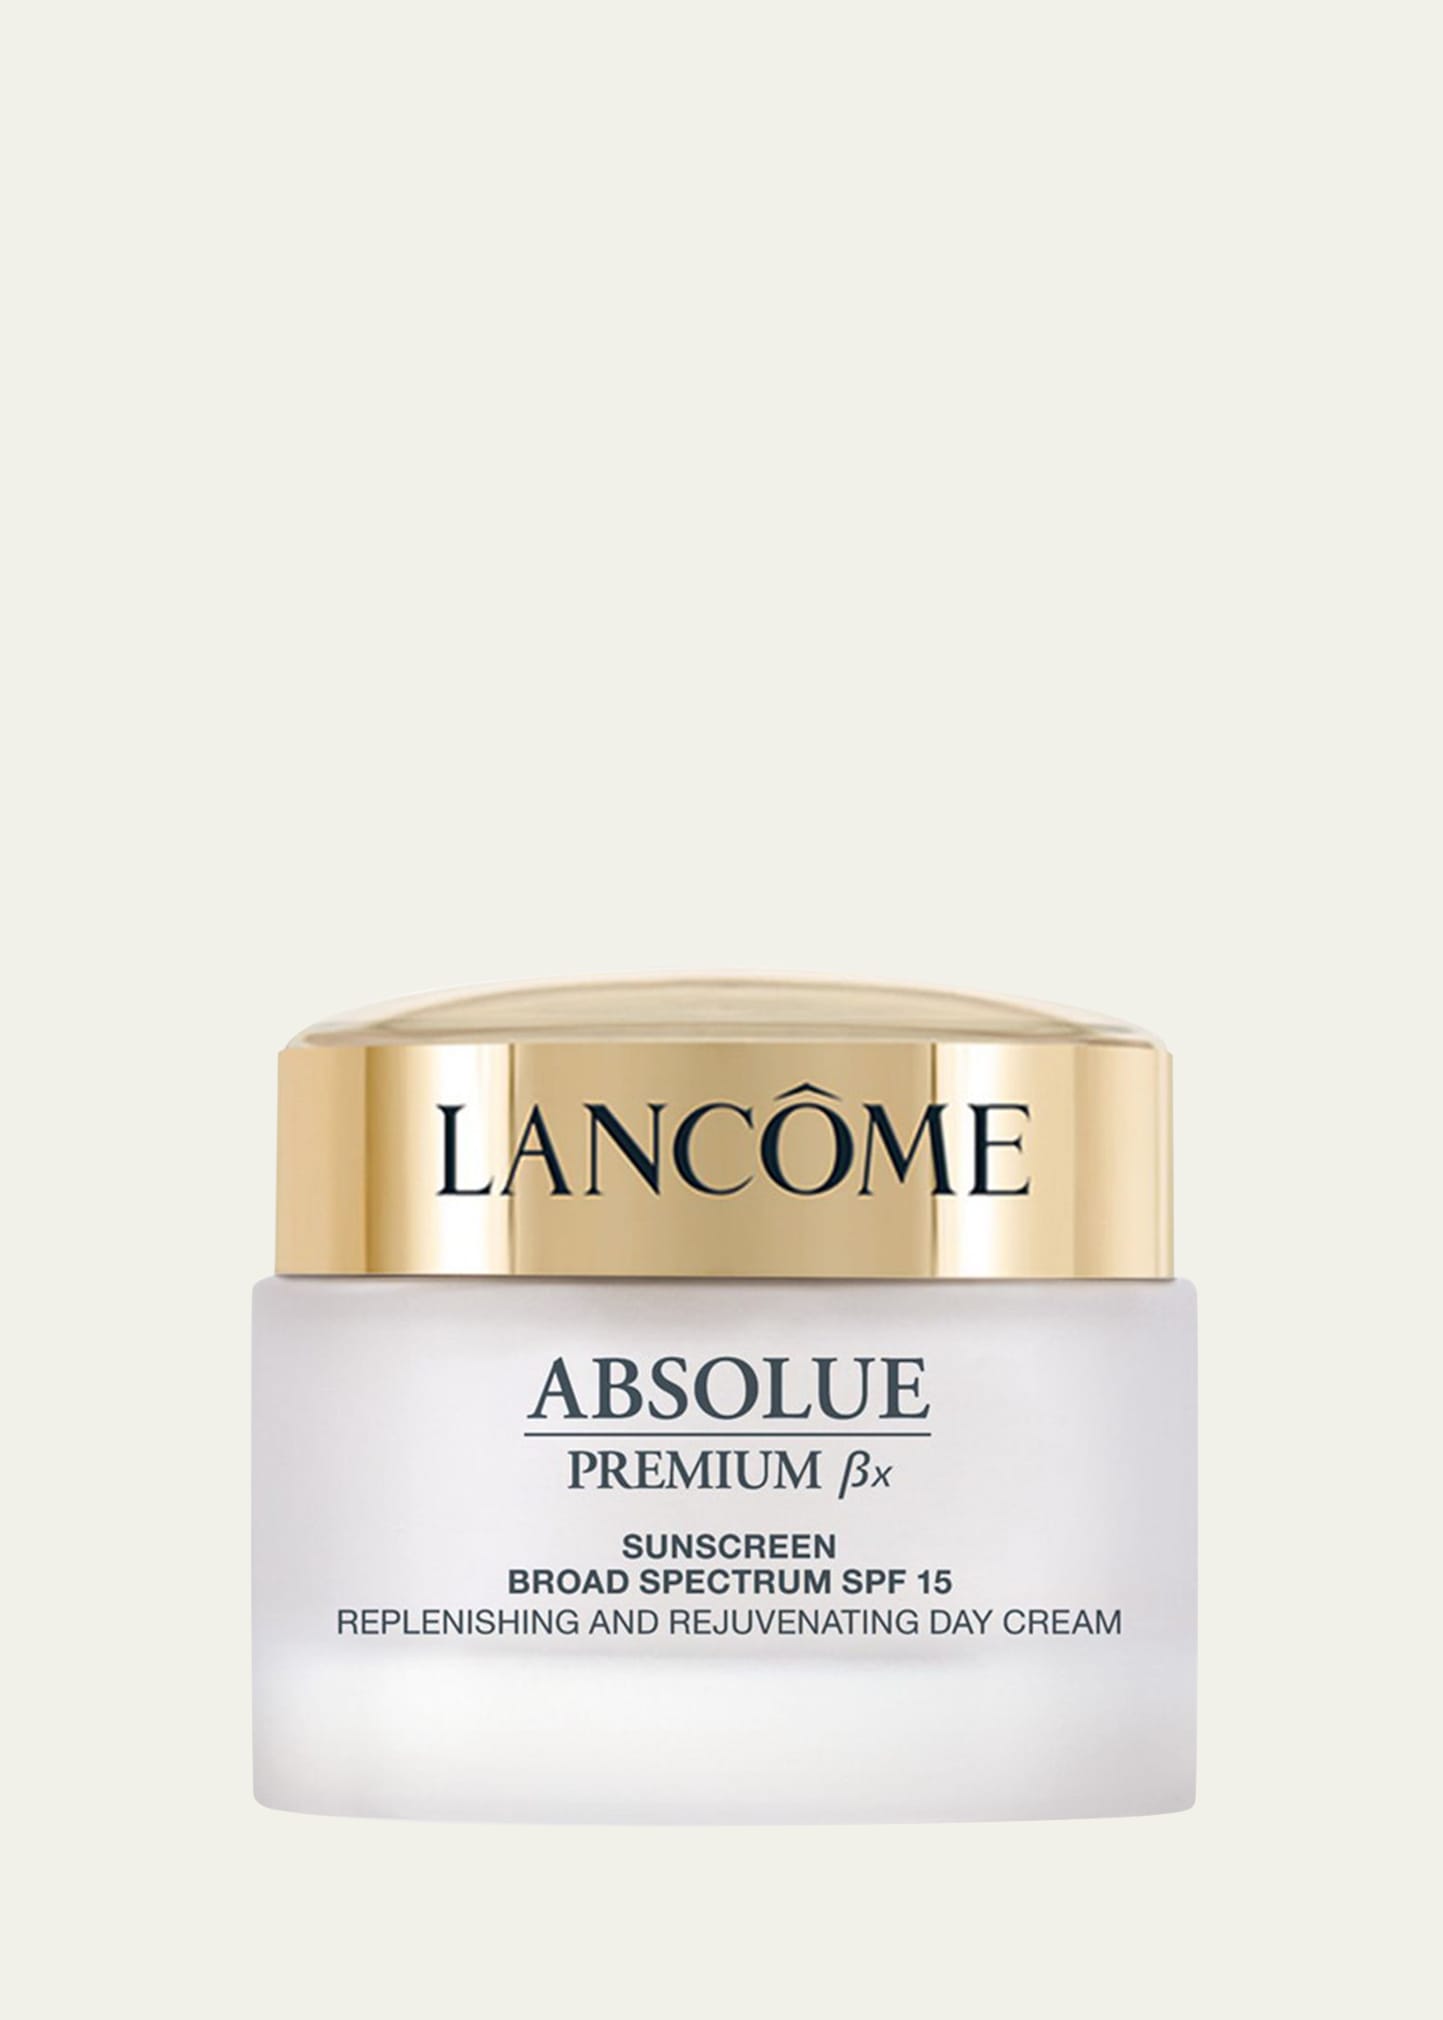 Absolue Premium Bx Replenishing and Rejuvenating Day Cream SPF 15, 1.7 oz.